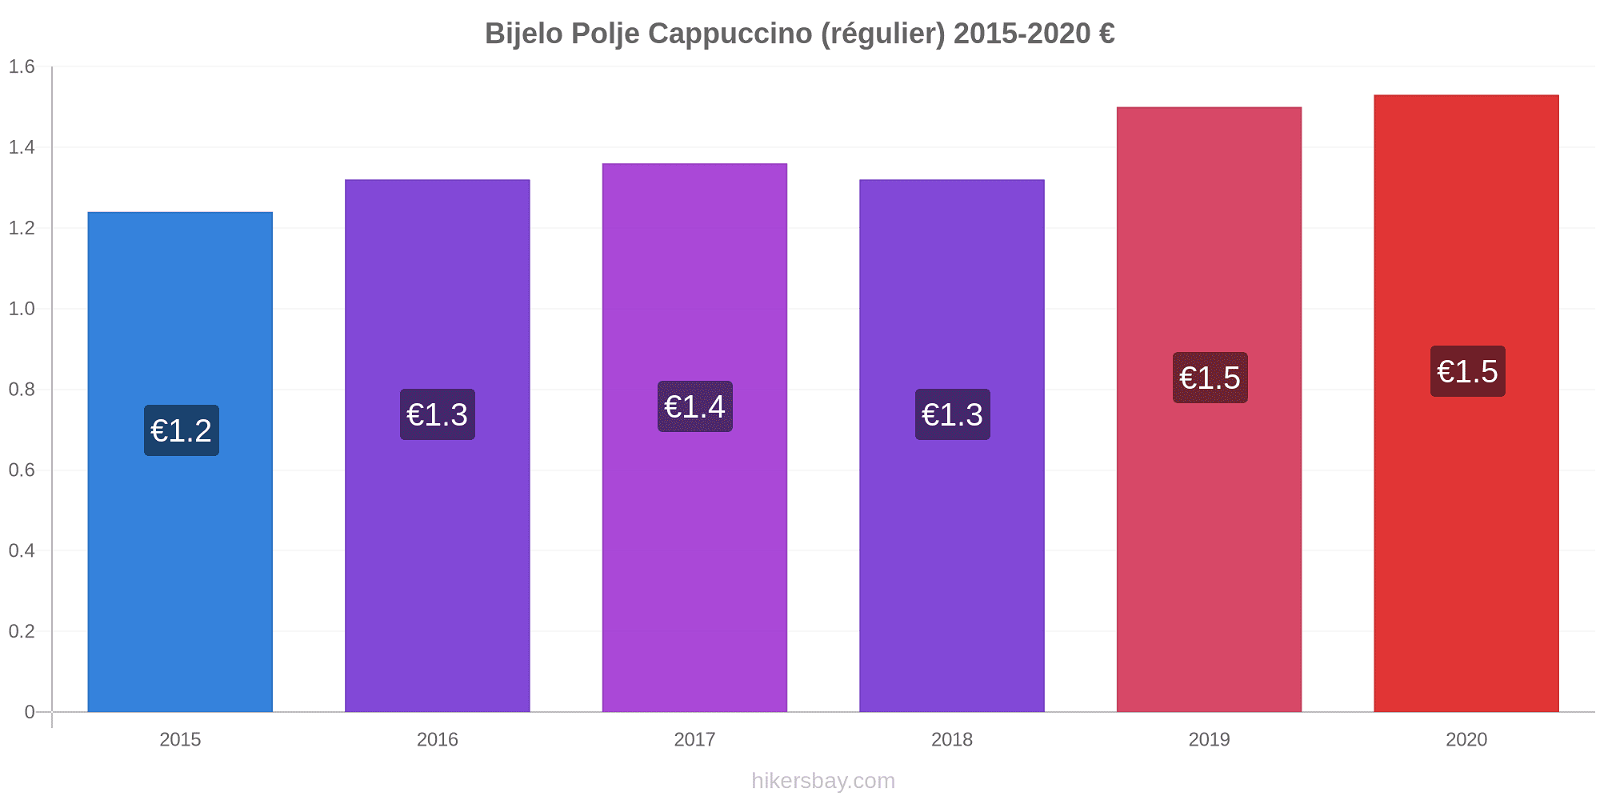 Bijelo Polje changements de prix Cappuccino (régulier) hikersbay.com